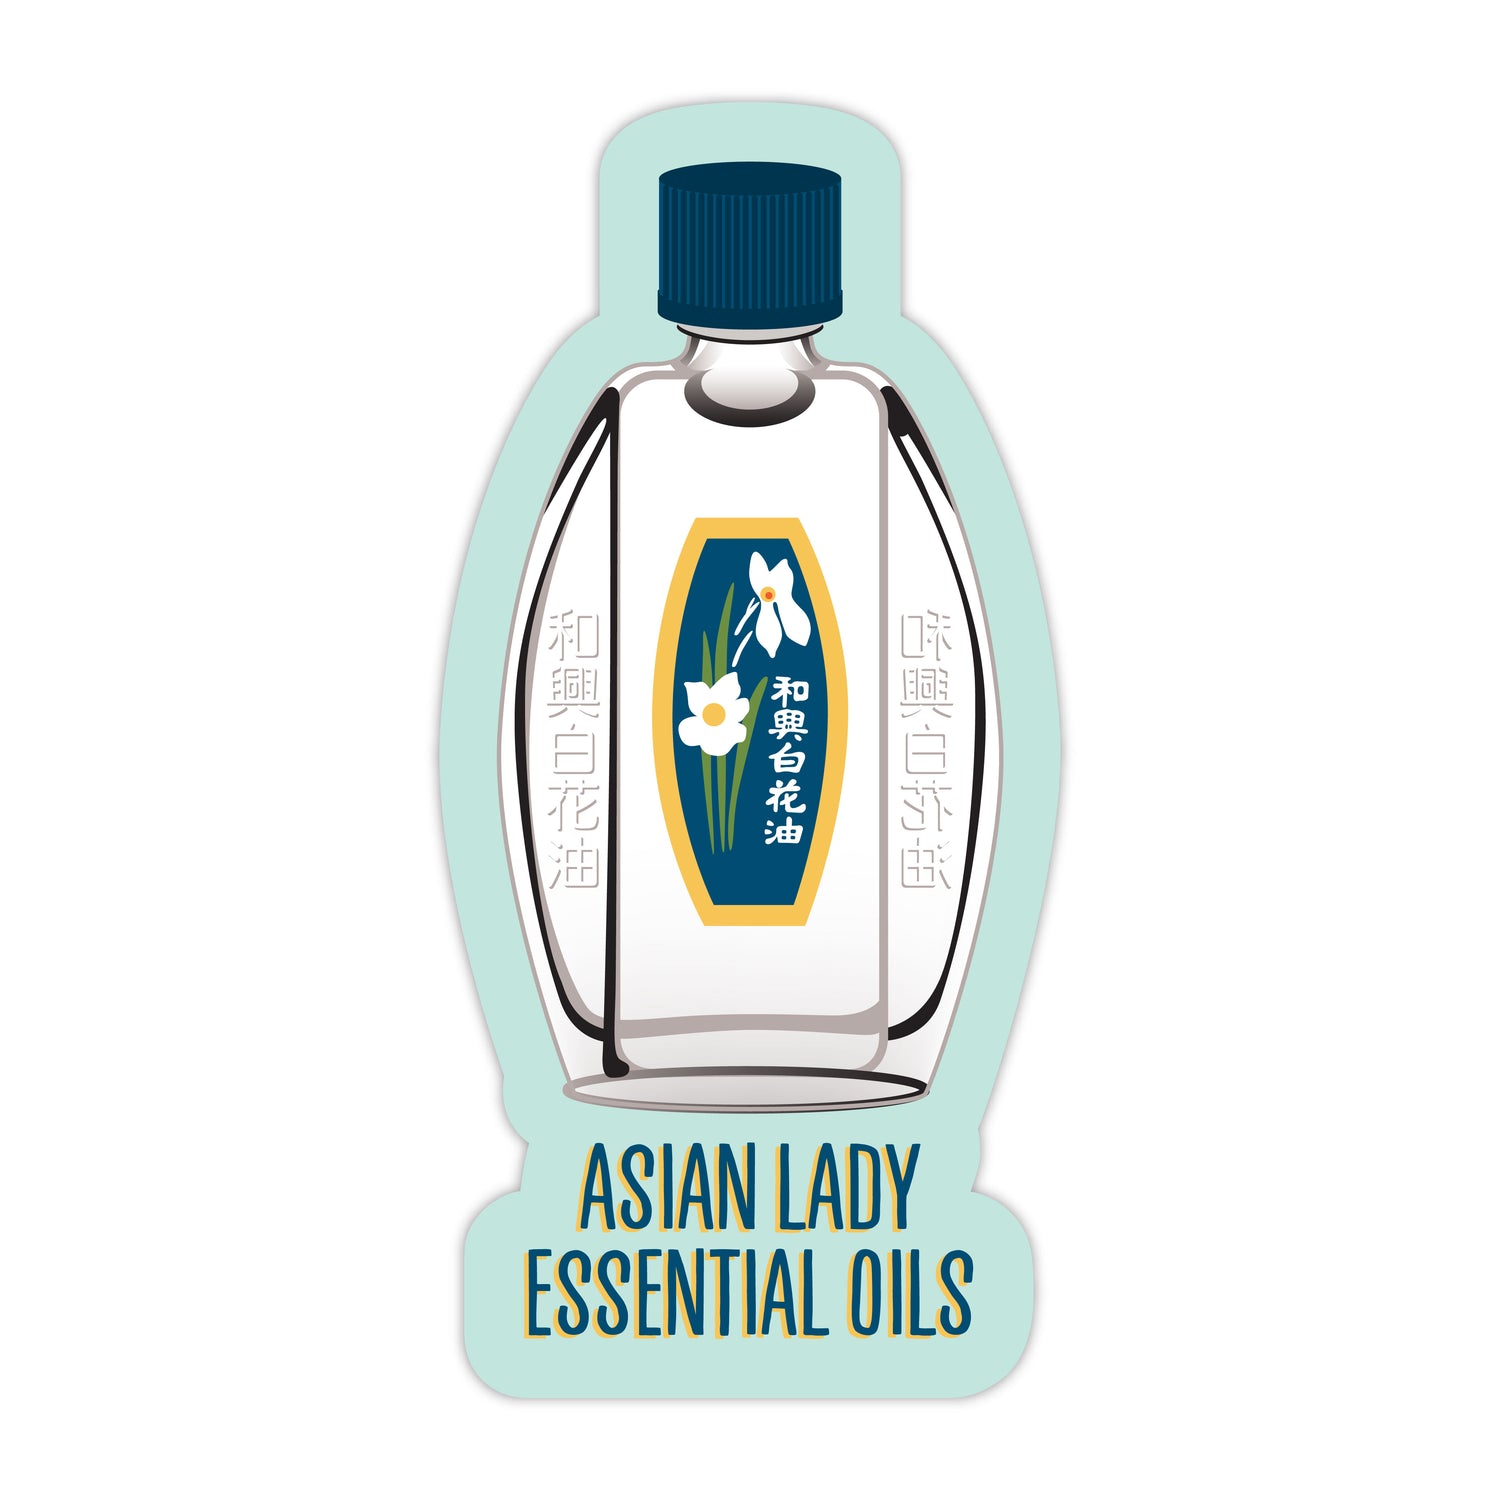 Asian lady essential oils white flower oil vinyl sticker by I&